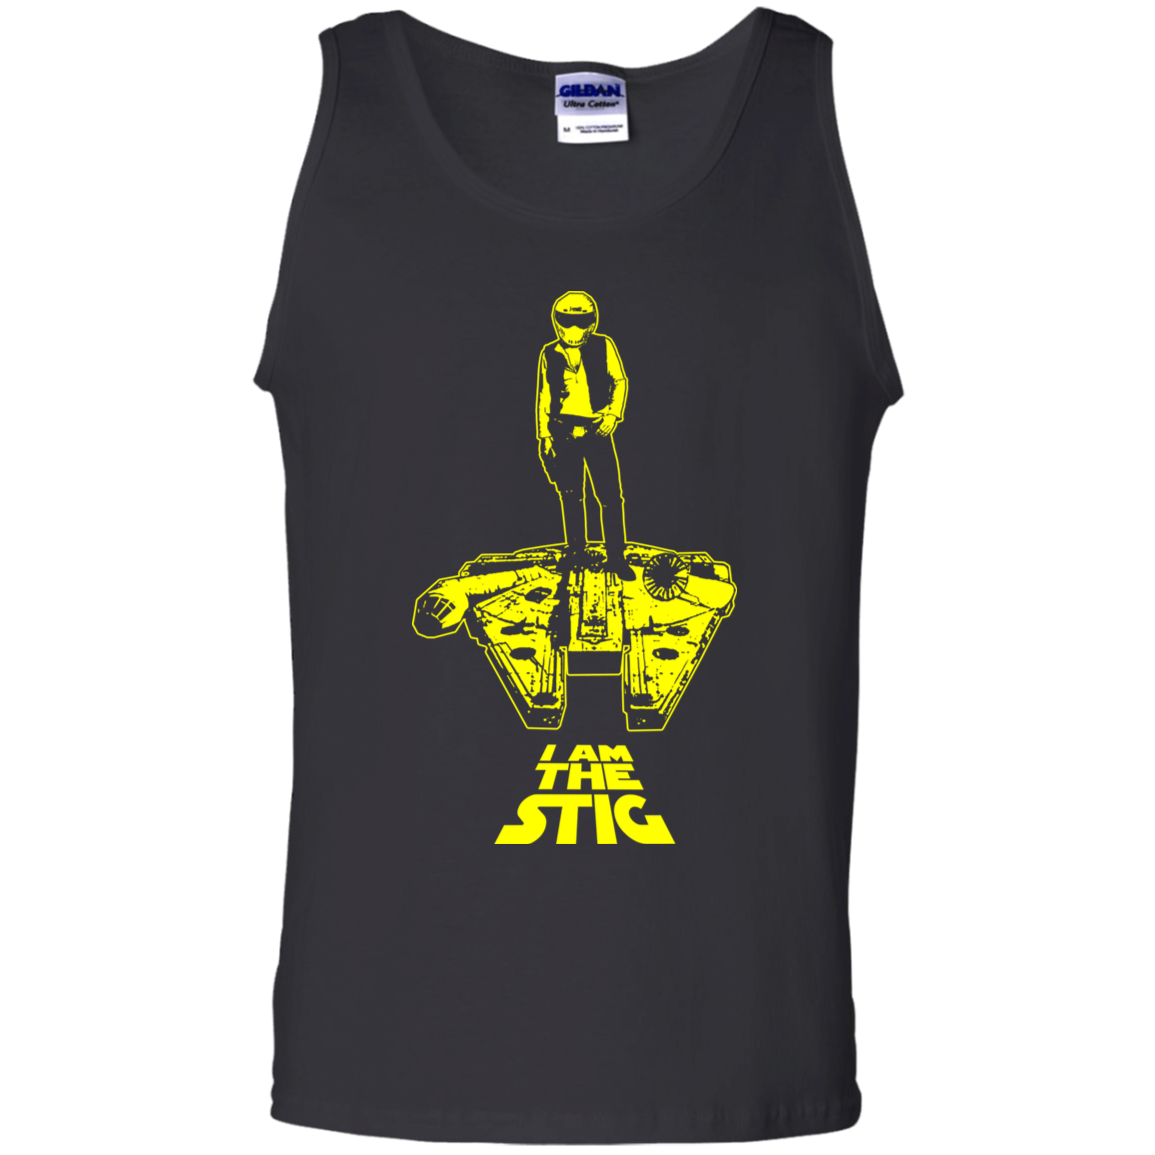 ArtichokeUSA Custom Design. I am the Stig. Han Solo / The Stig Fan Art. 100% Cotton Tank Top